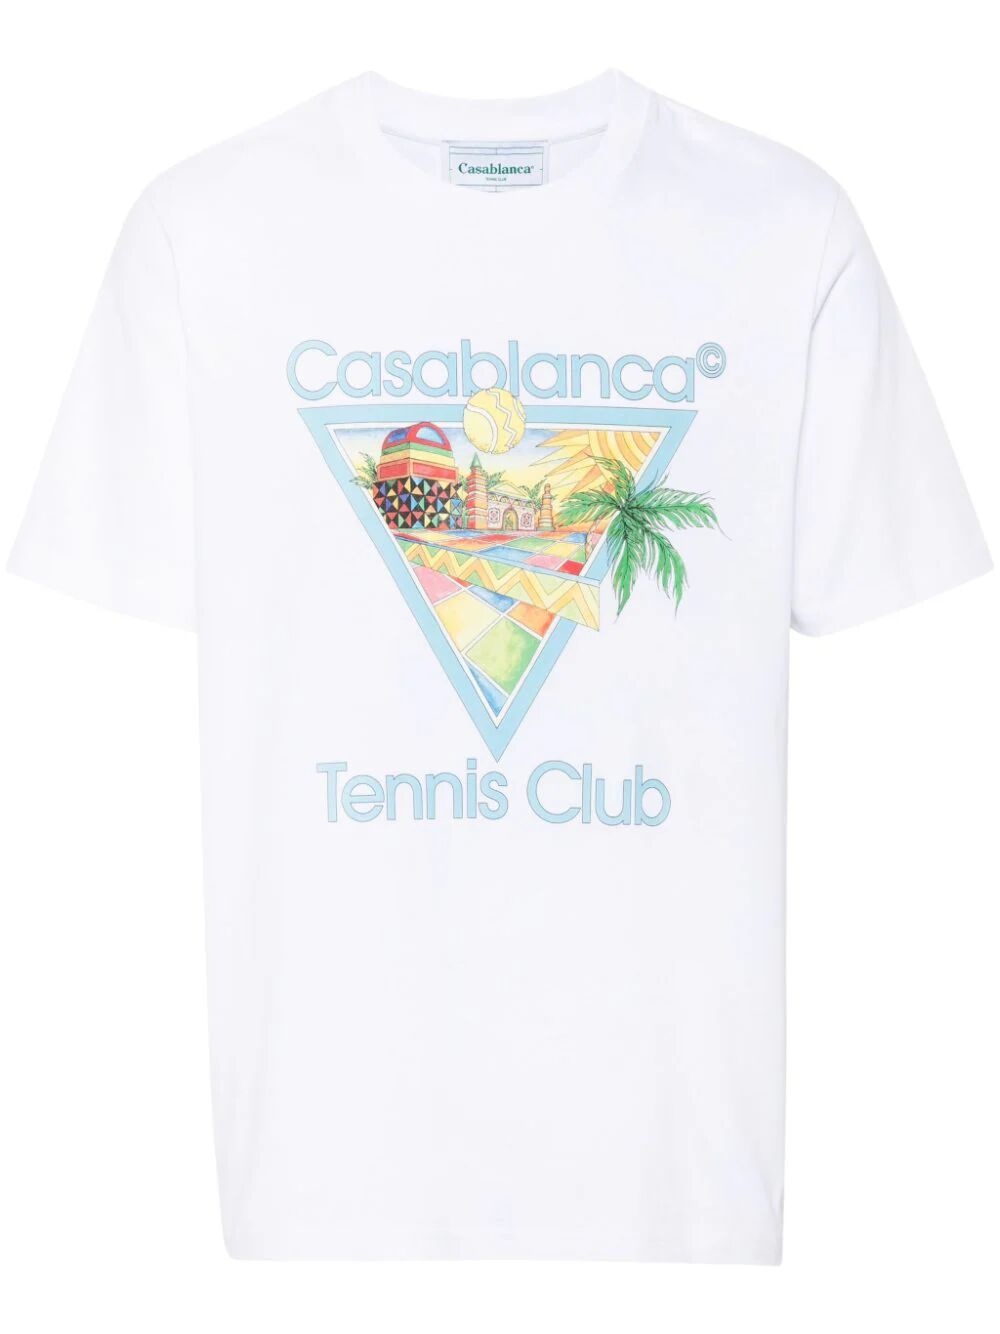 Afro cubism tennis club t-shirt - 1